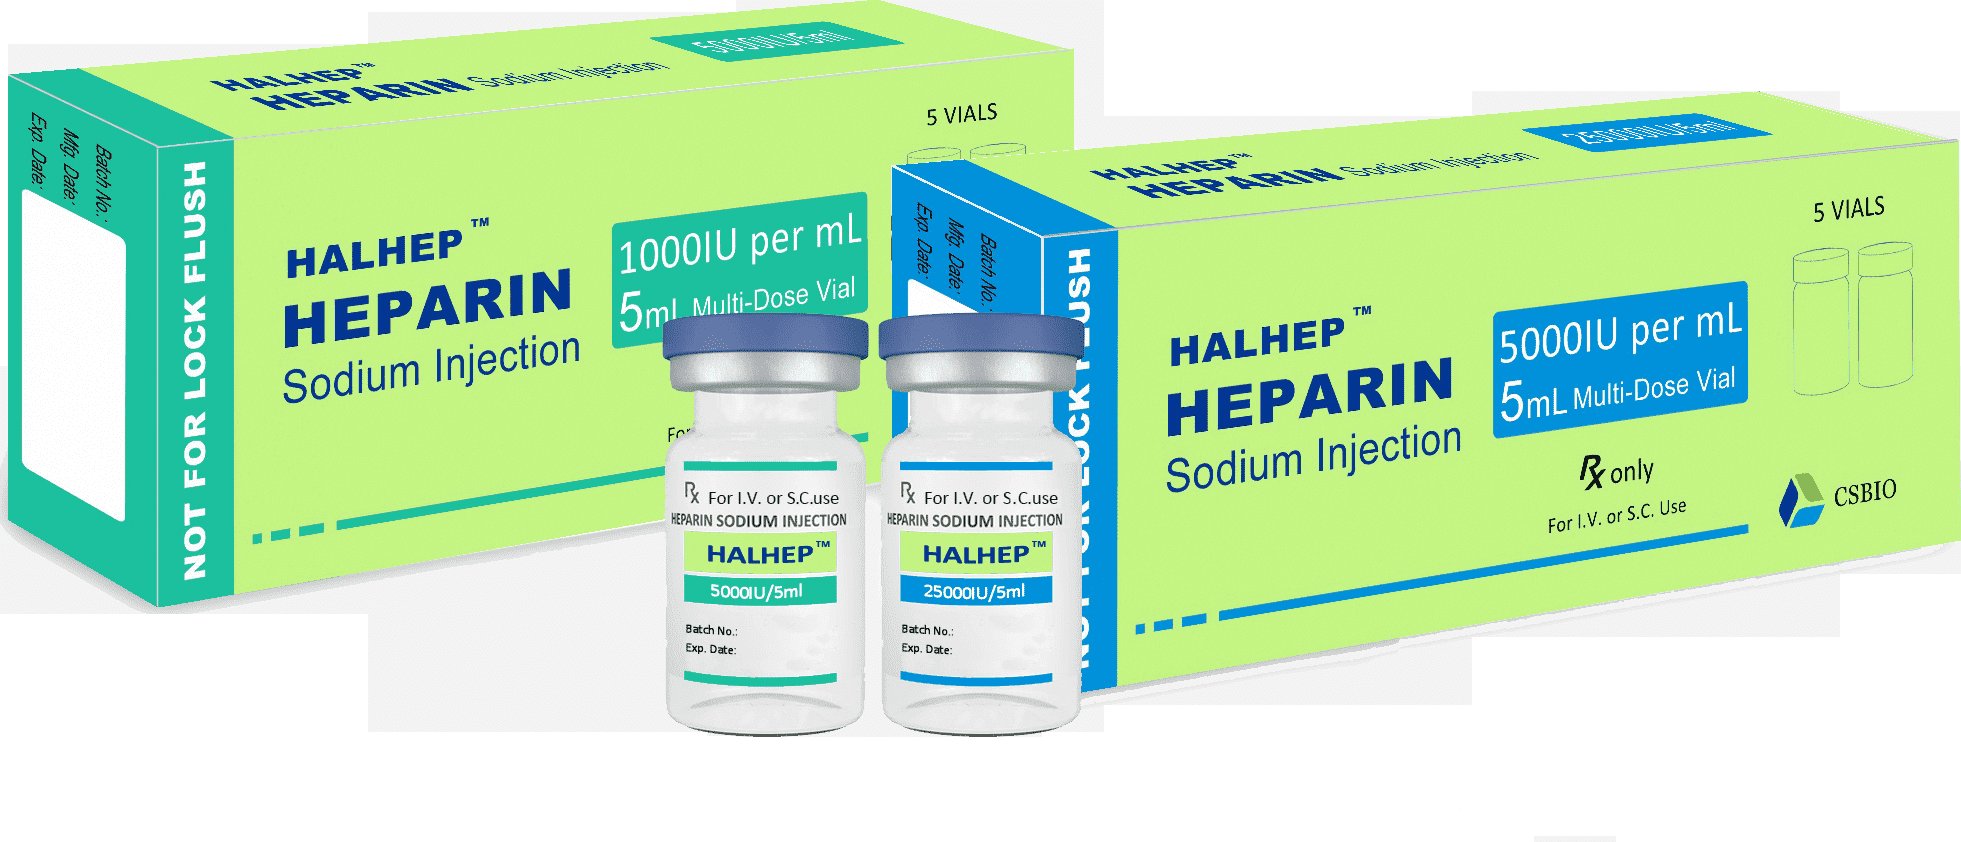 PriceList for Heparin For Dvt Treatment - Heparin Sodium Injection(Bovine Source) – CSBIO